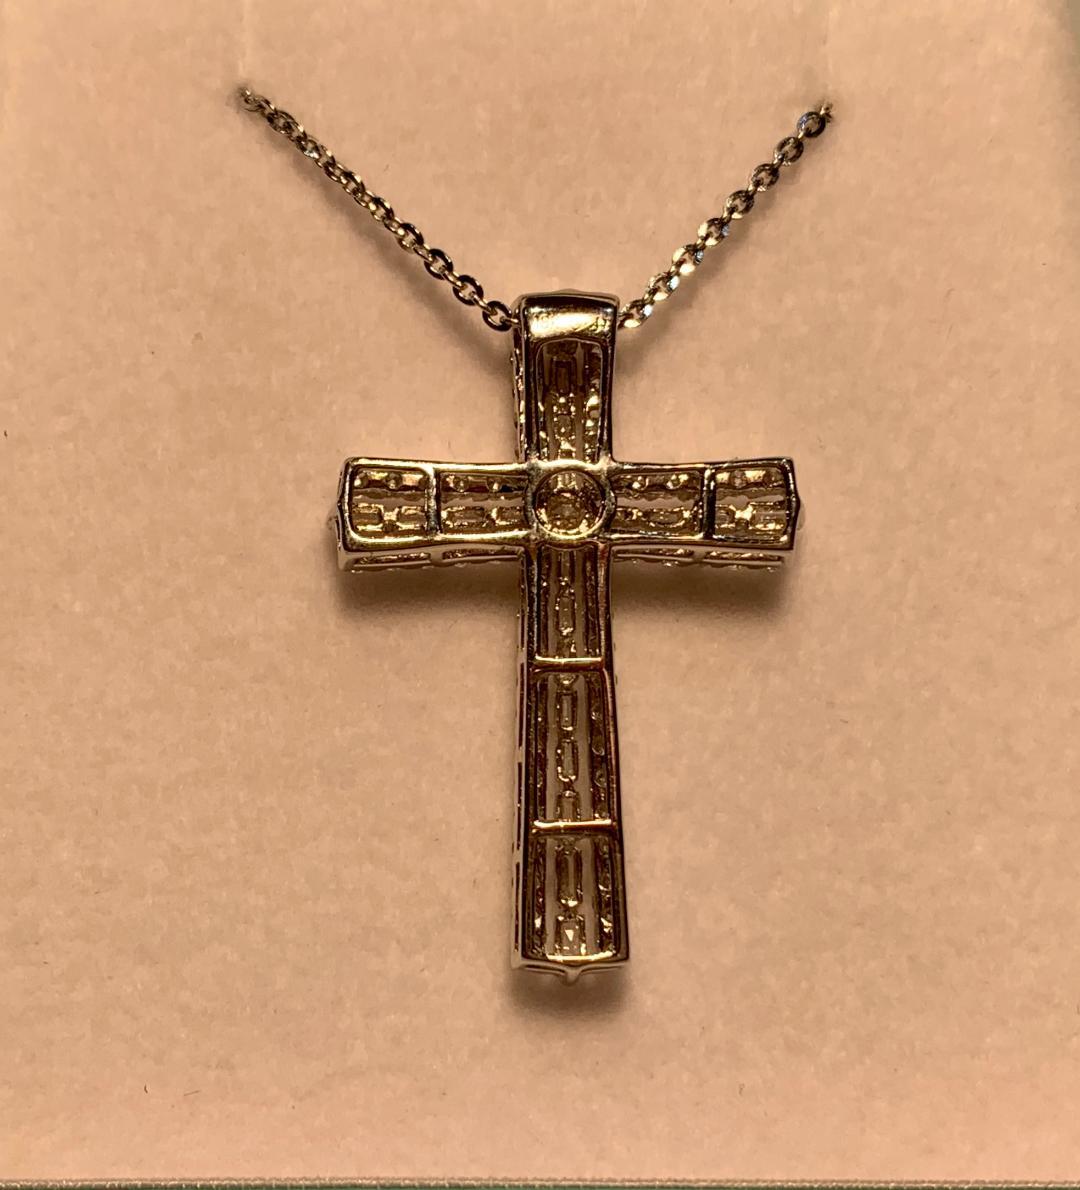 Heavenly 1.25 Carat Diamond Cross Pendant in 18K White Gold on White Gold Chain 4